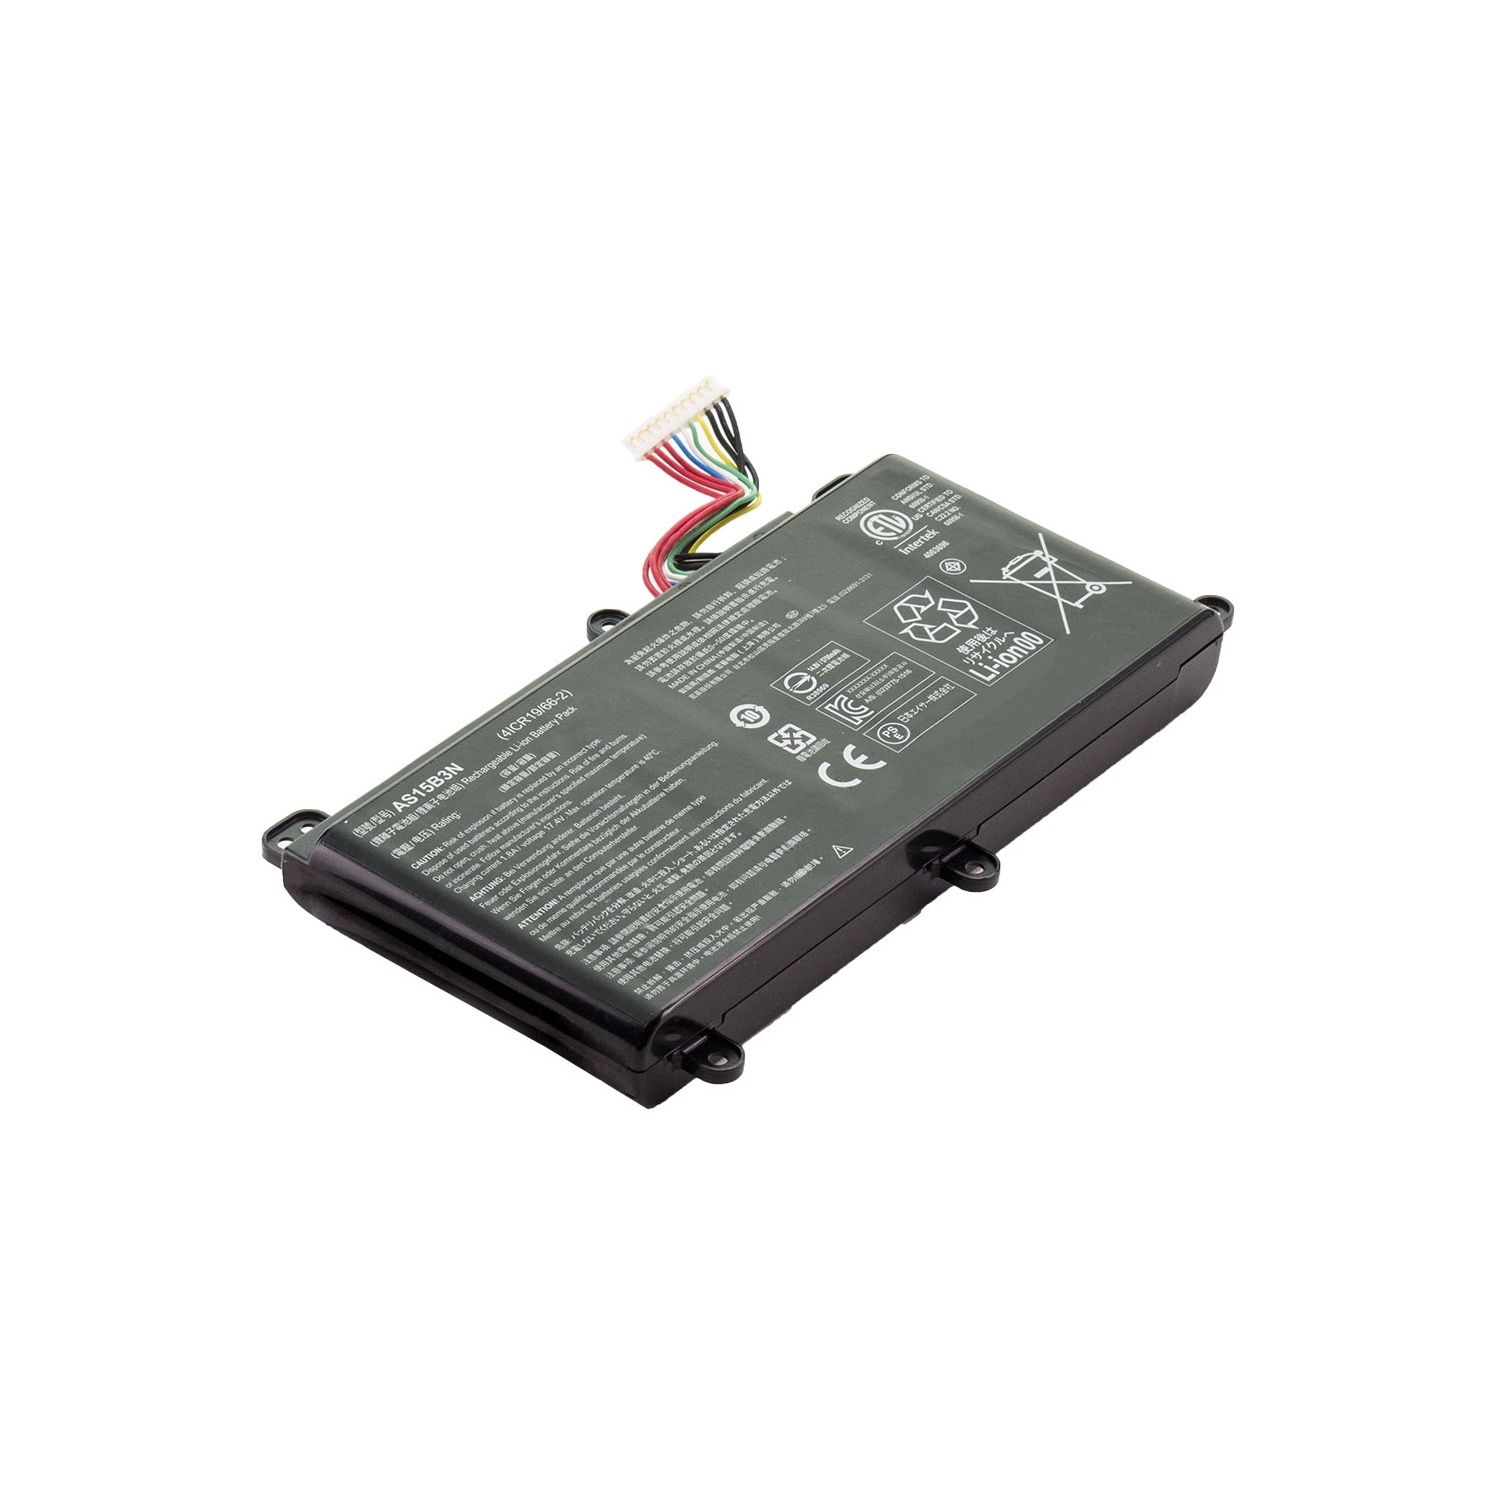 BATTDEPOT NEW Laptop Battery for Acer Predator 15 G9-593 AS15B3N KT.00803.004 KT.00803.005